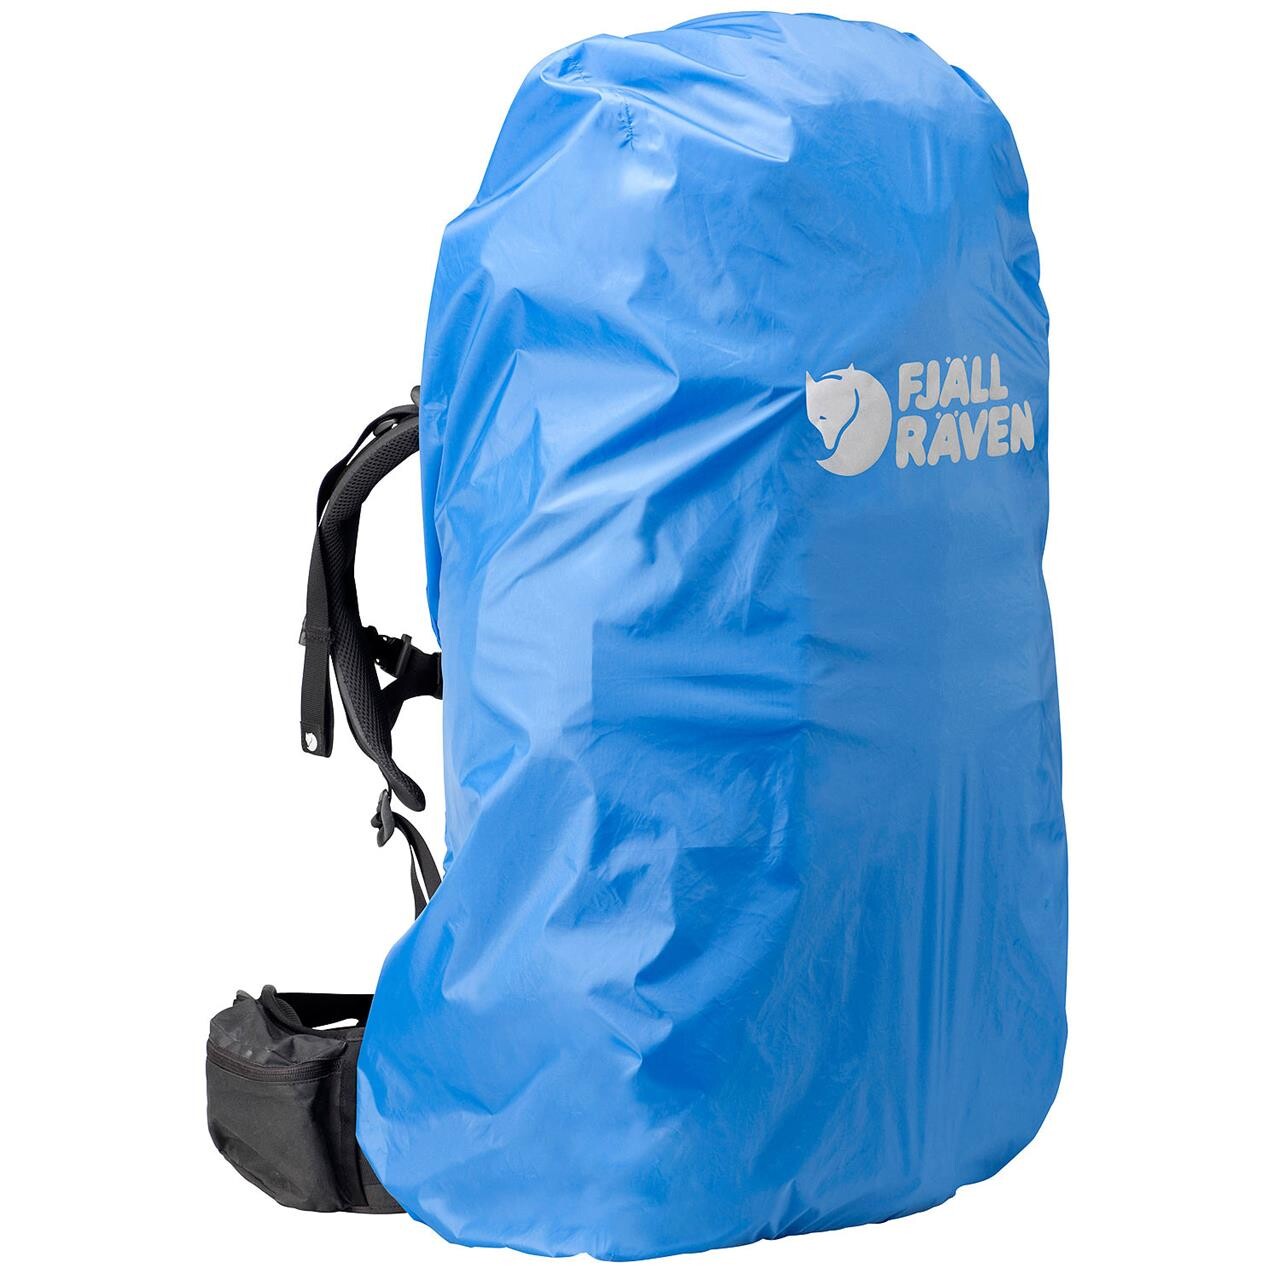 #3 - Fjällräven Rain Cover / regnslag 60-75 L, UN blue - Regnslag til rygsæk, vandpose mm.